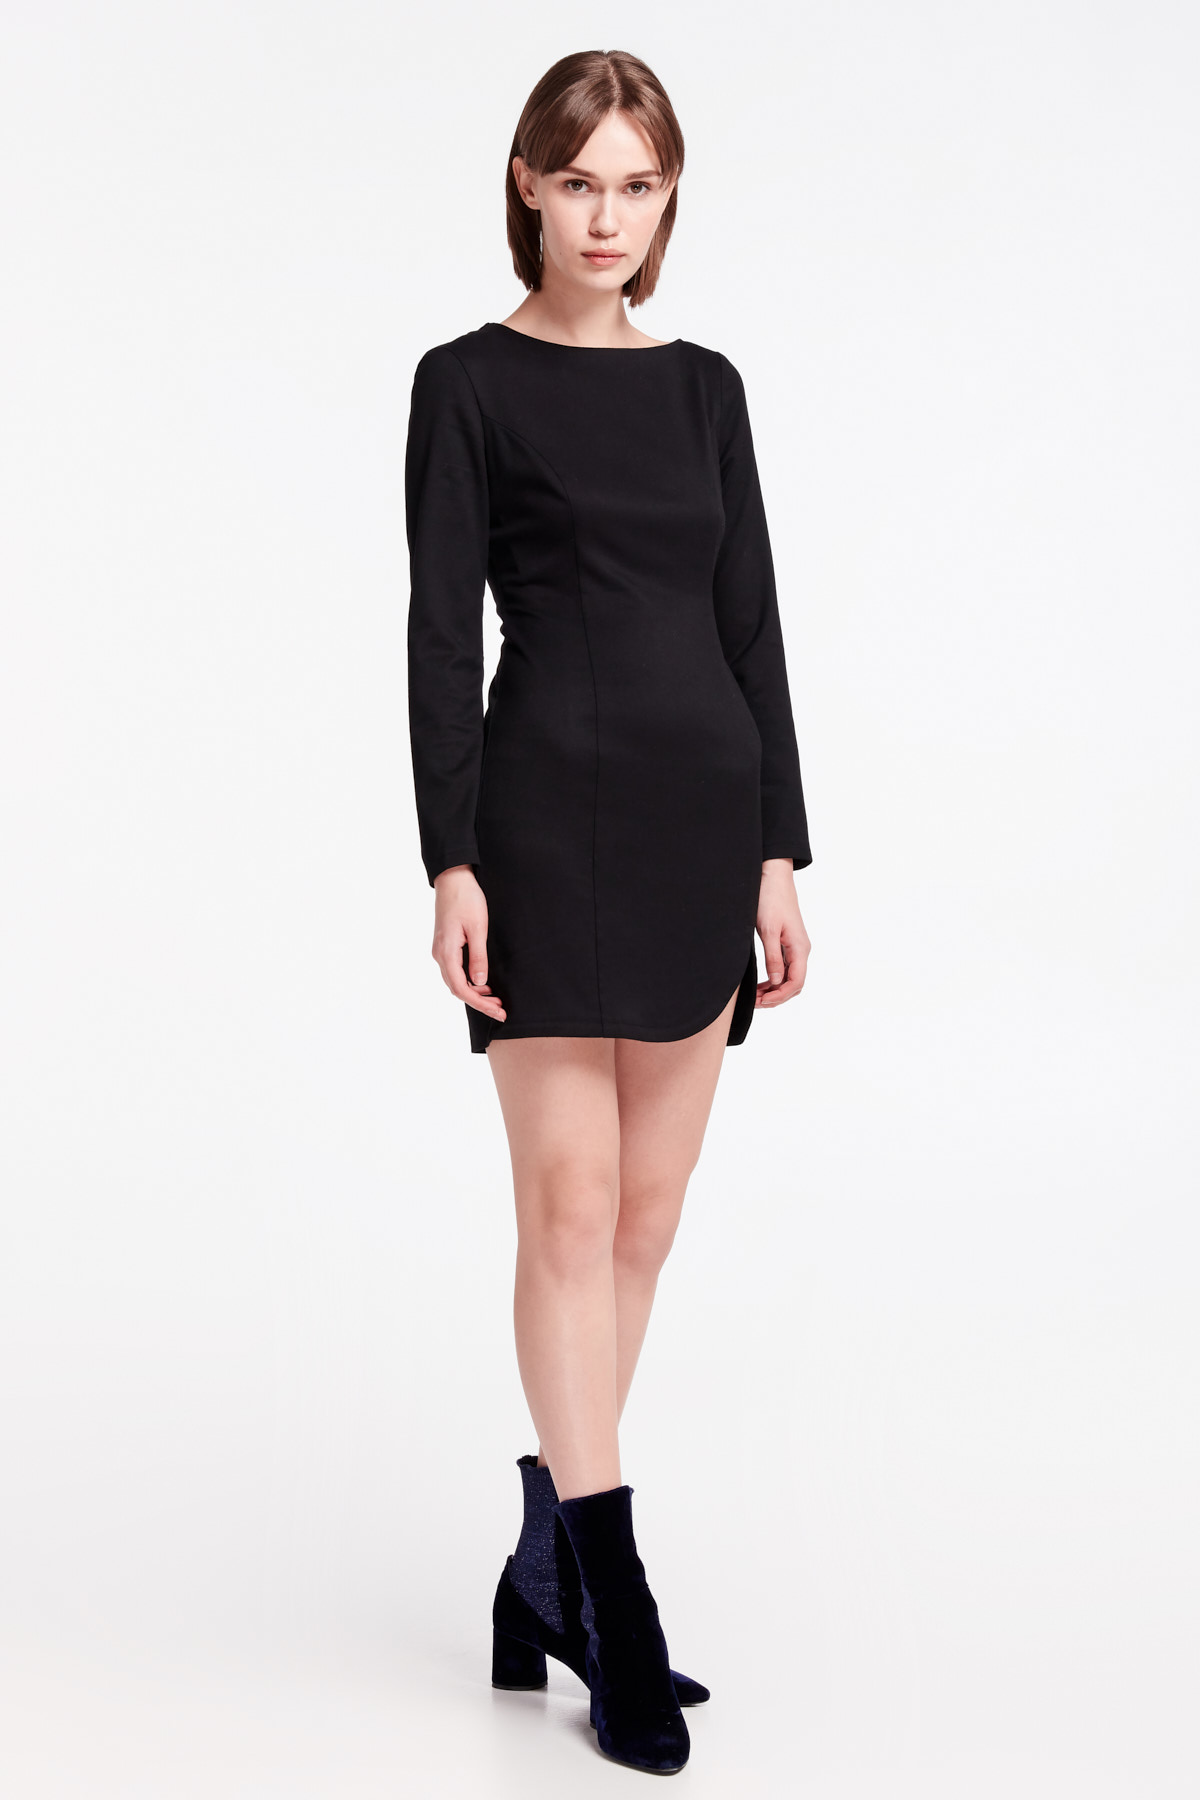 Black dress with above-knee asymmetric cut, photo 3